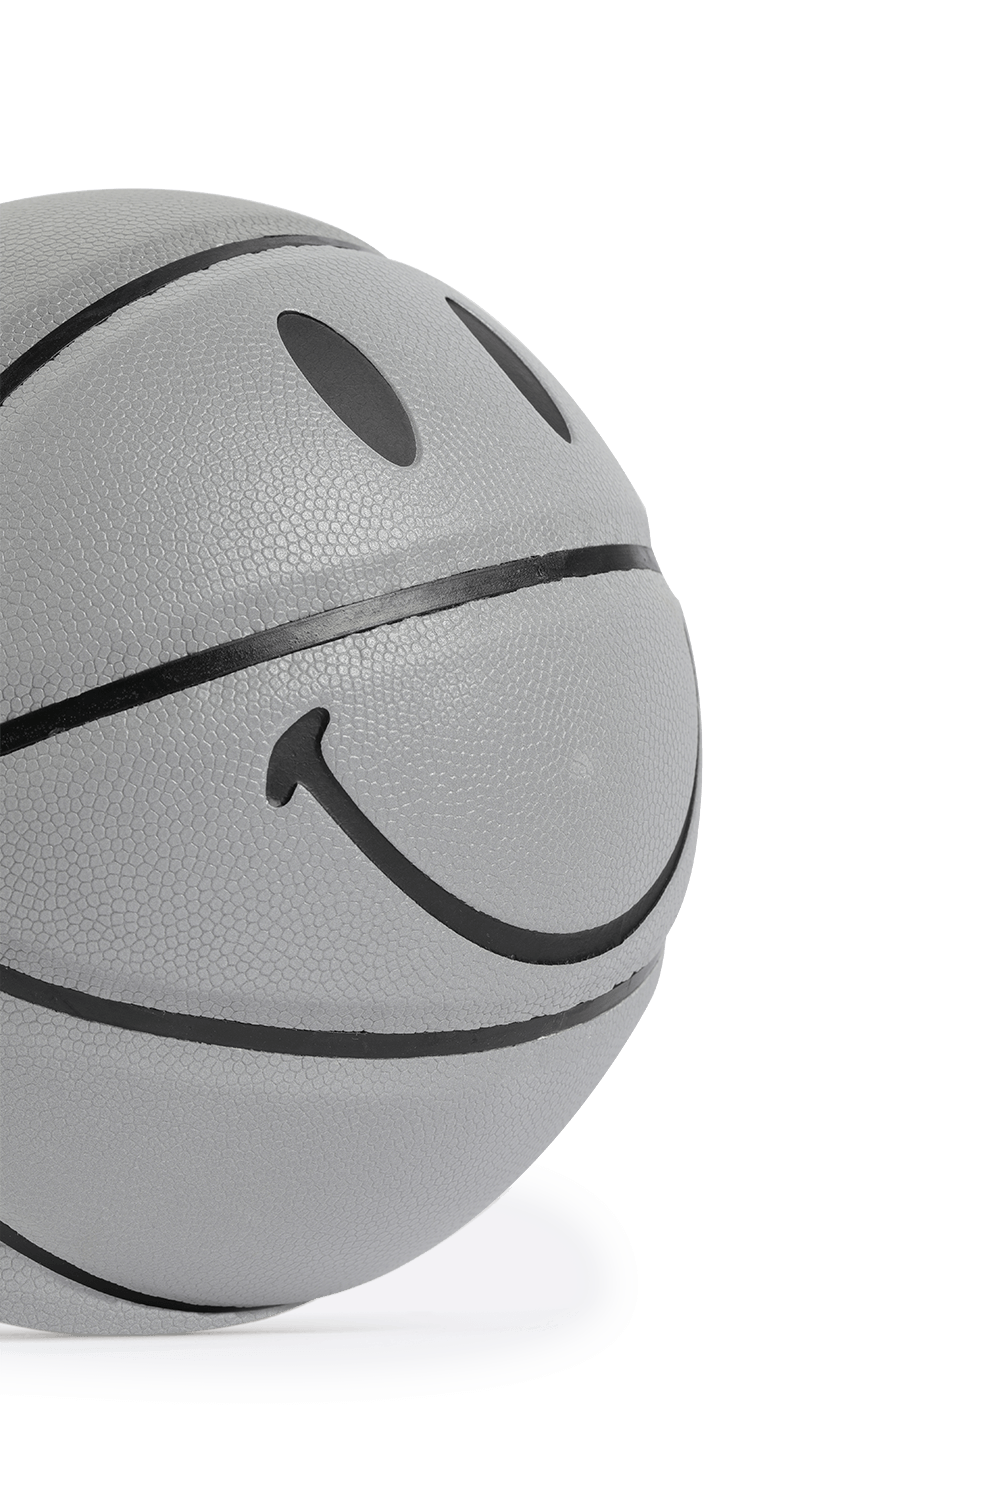 Smiley 3M Basketball MARKET